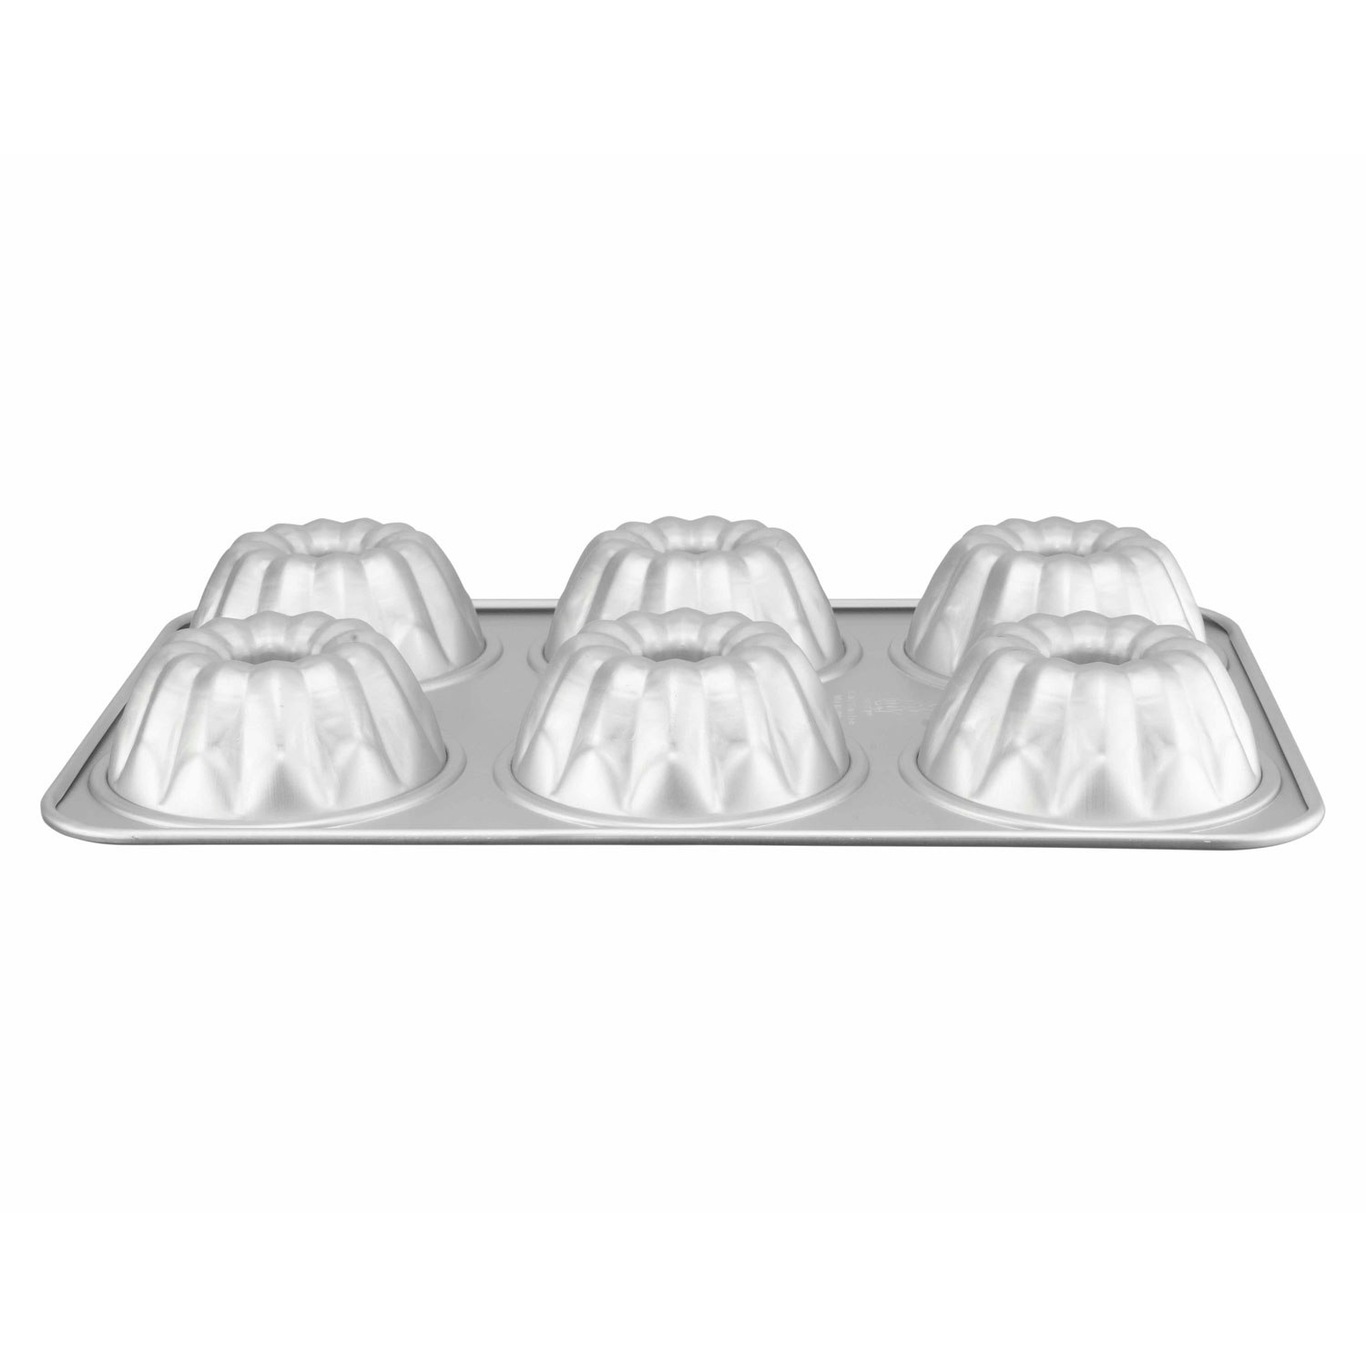 https://royaldesign.com/image/2/heirol-baking-tin-anodised-aluminium-6-portions-1?w=800&quality=80